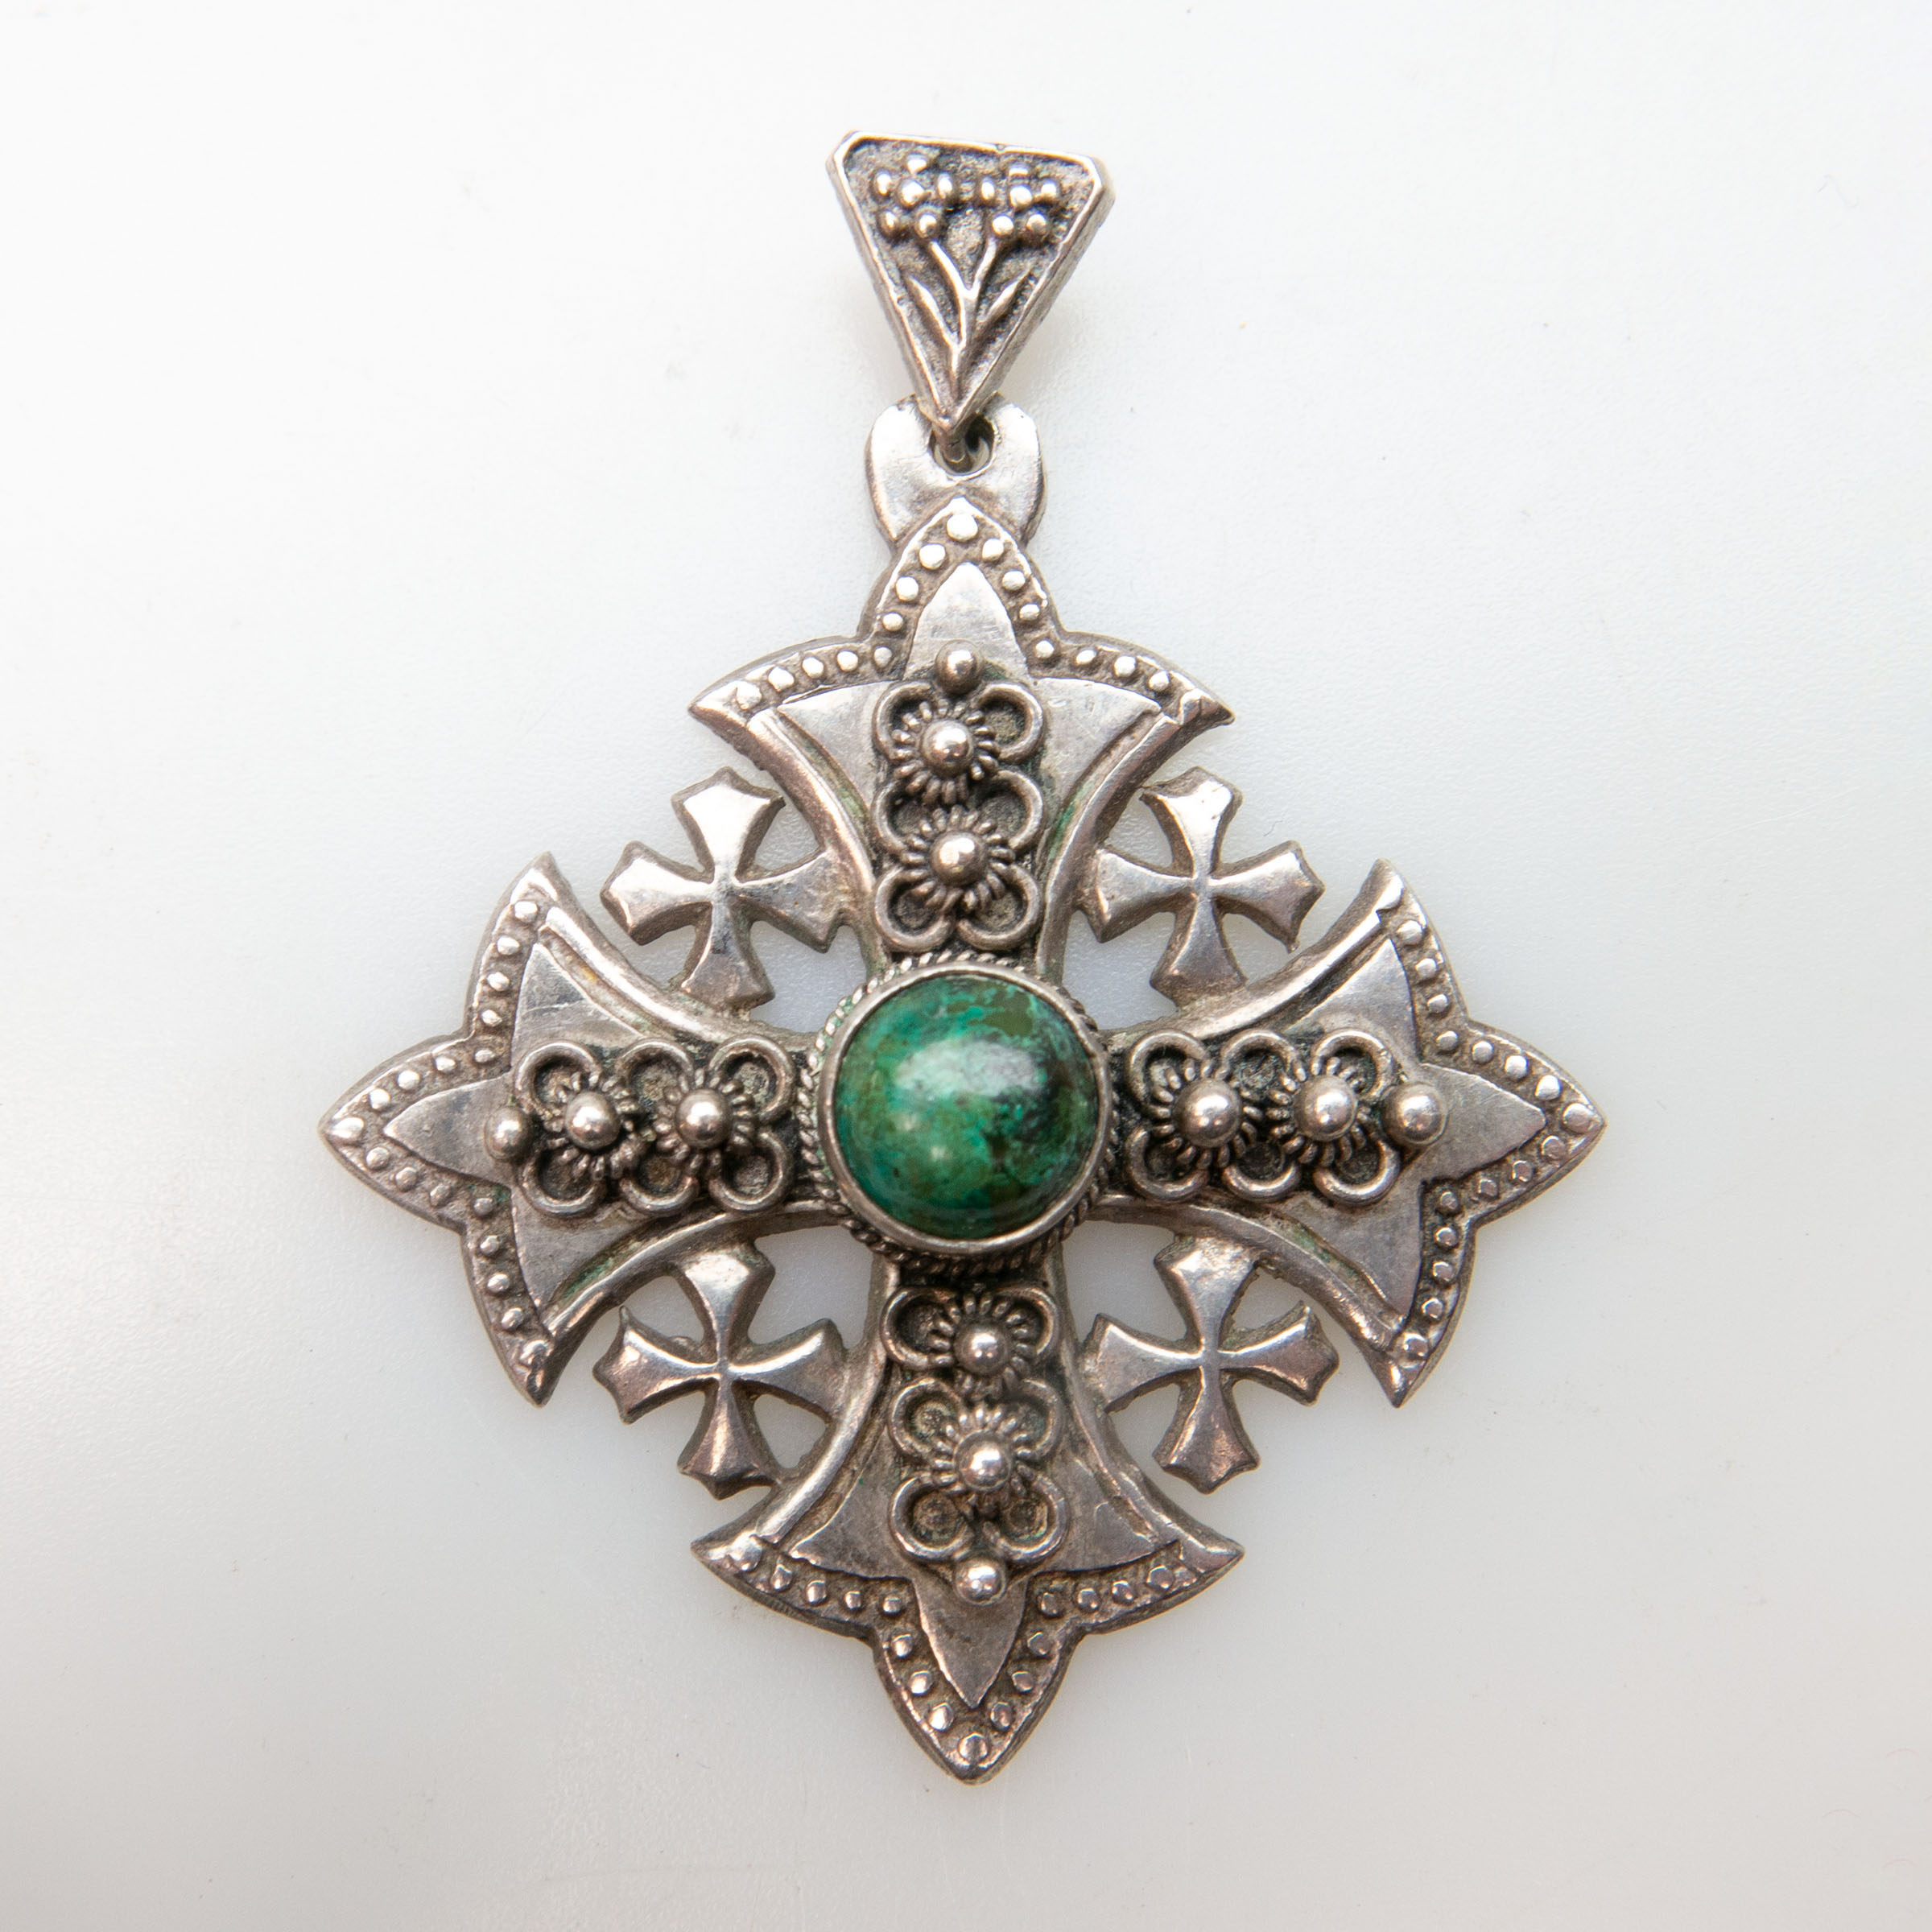 Jerusalem 900 Grade Silver Cross Pendant